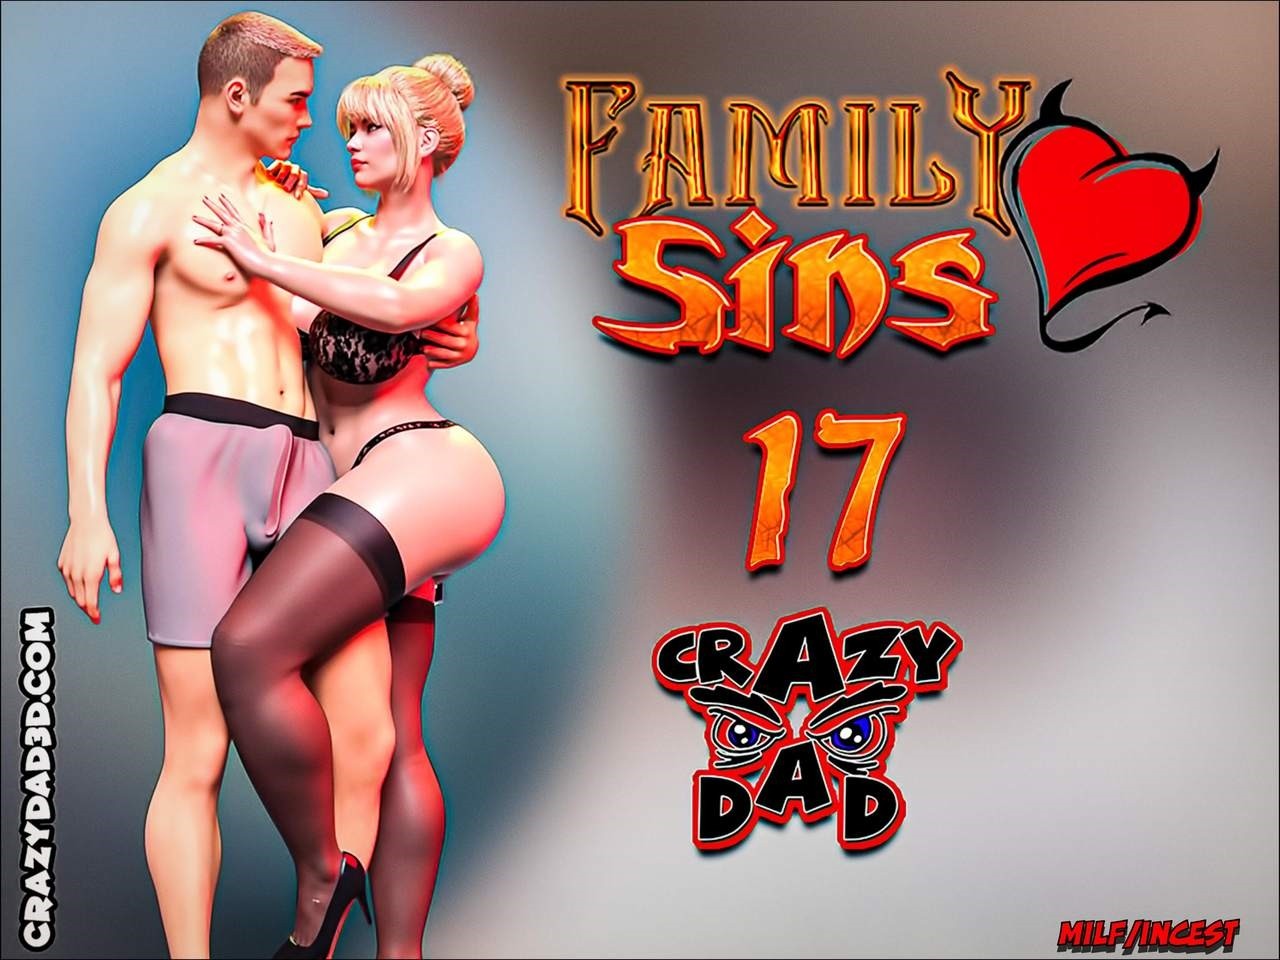 CrazyDad3D - Family Sins 17